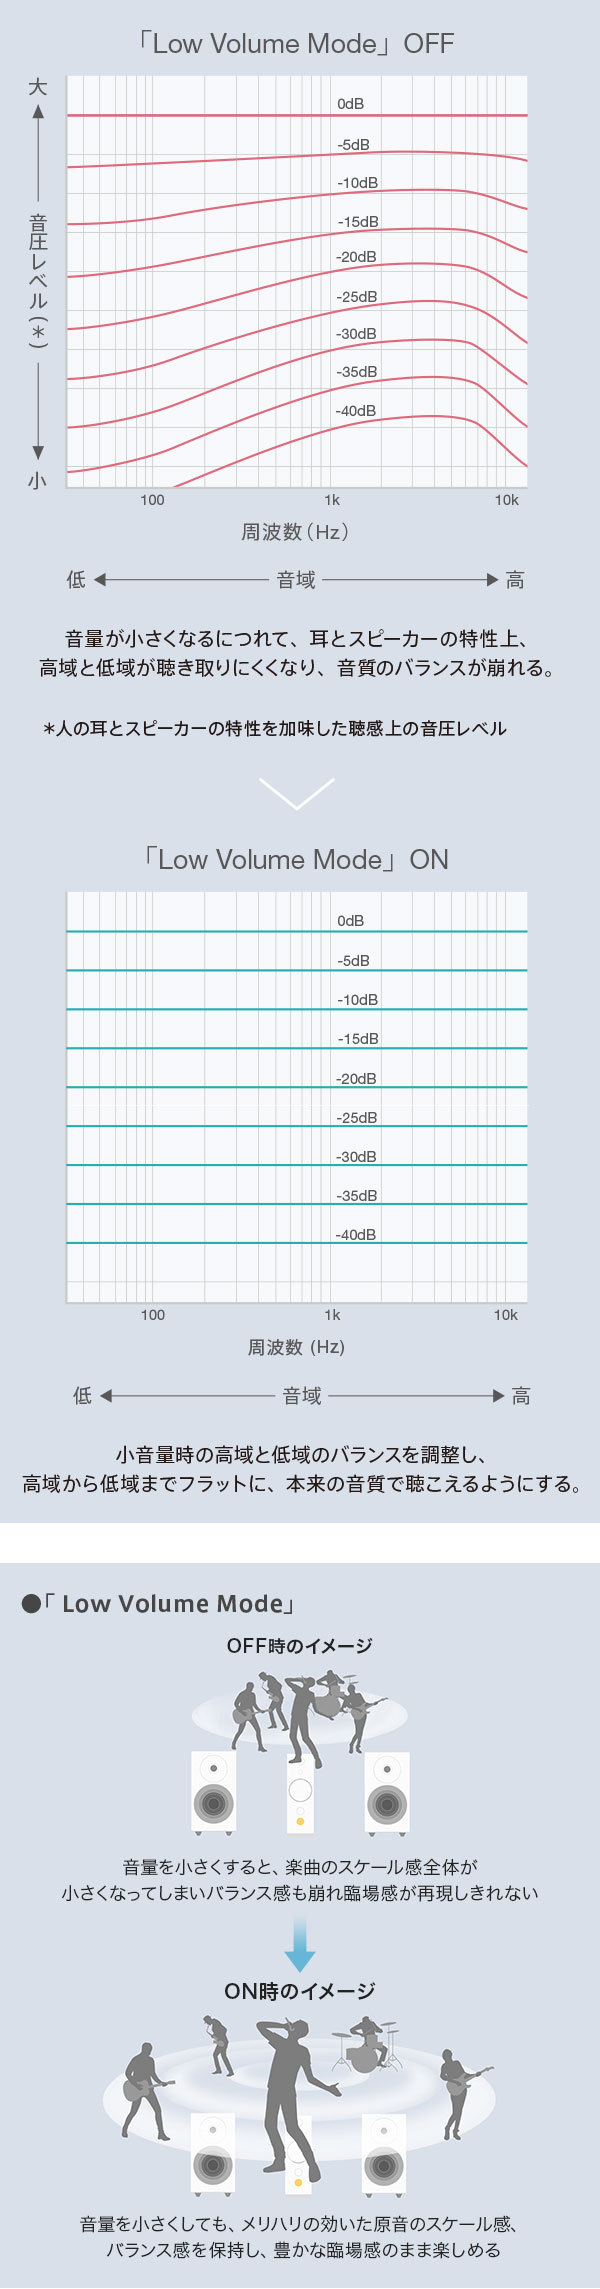 「Low Volume Mode」OFF/ONイメージ1／「Low Volume Mode」OFF/ONイメージ2